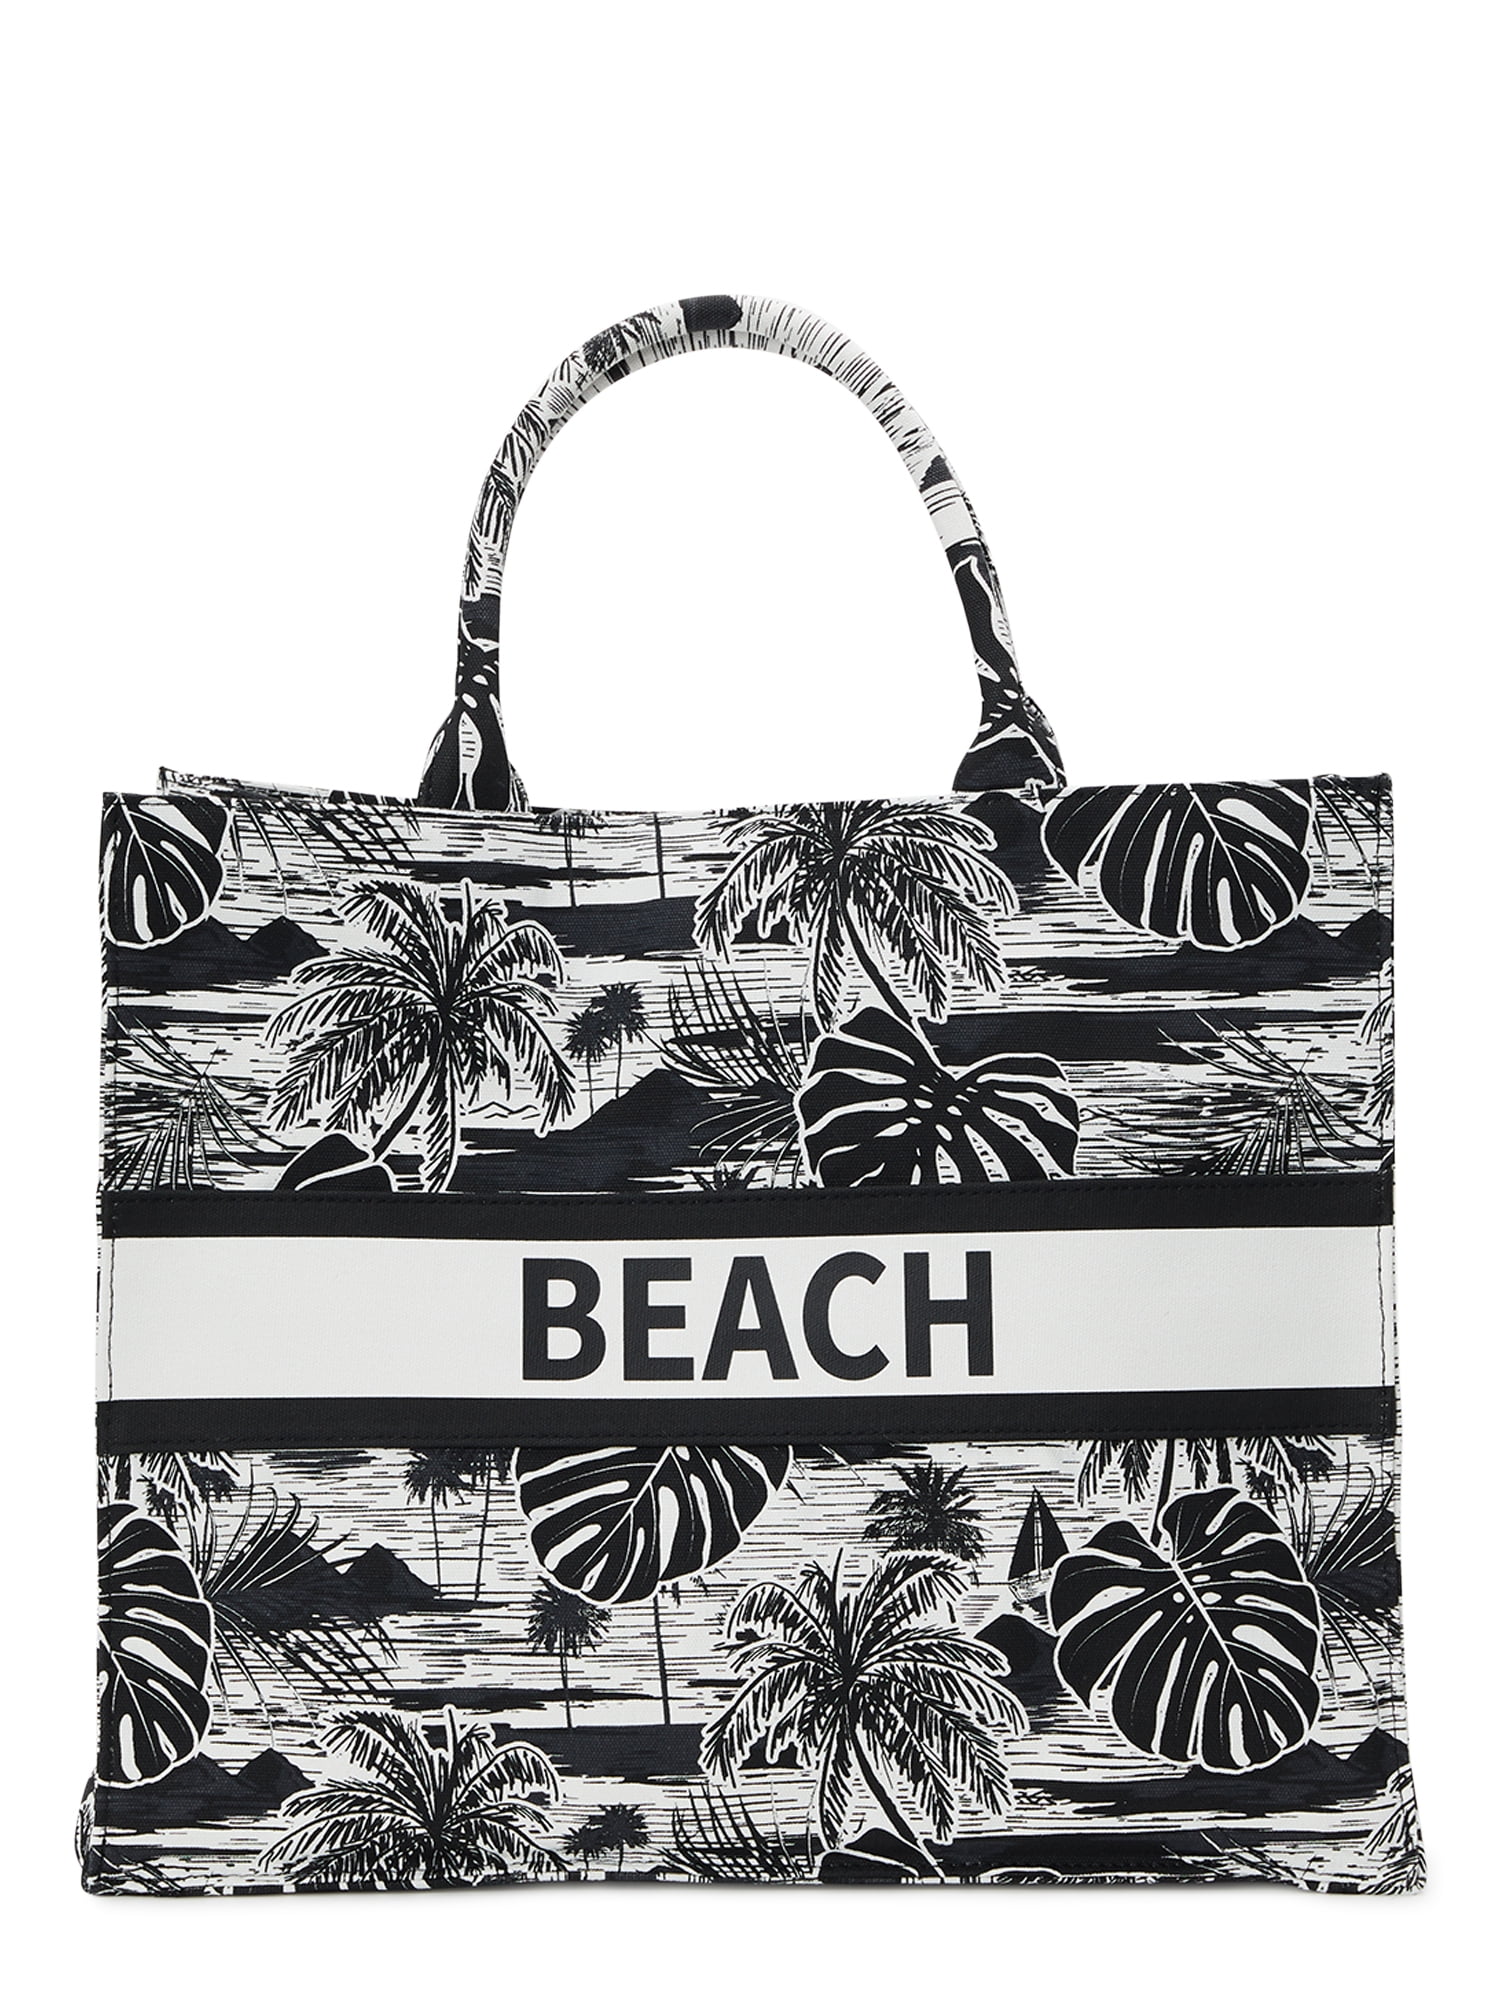 No Boundaries Women's Canvas Print Beach Tote Handbag, Black/White